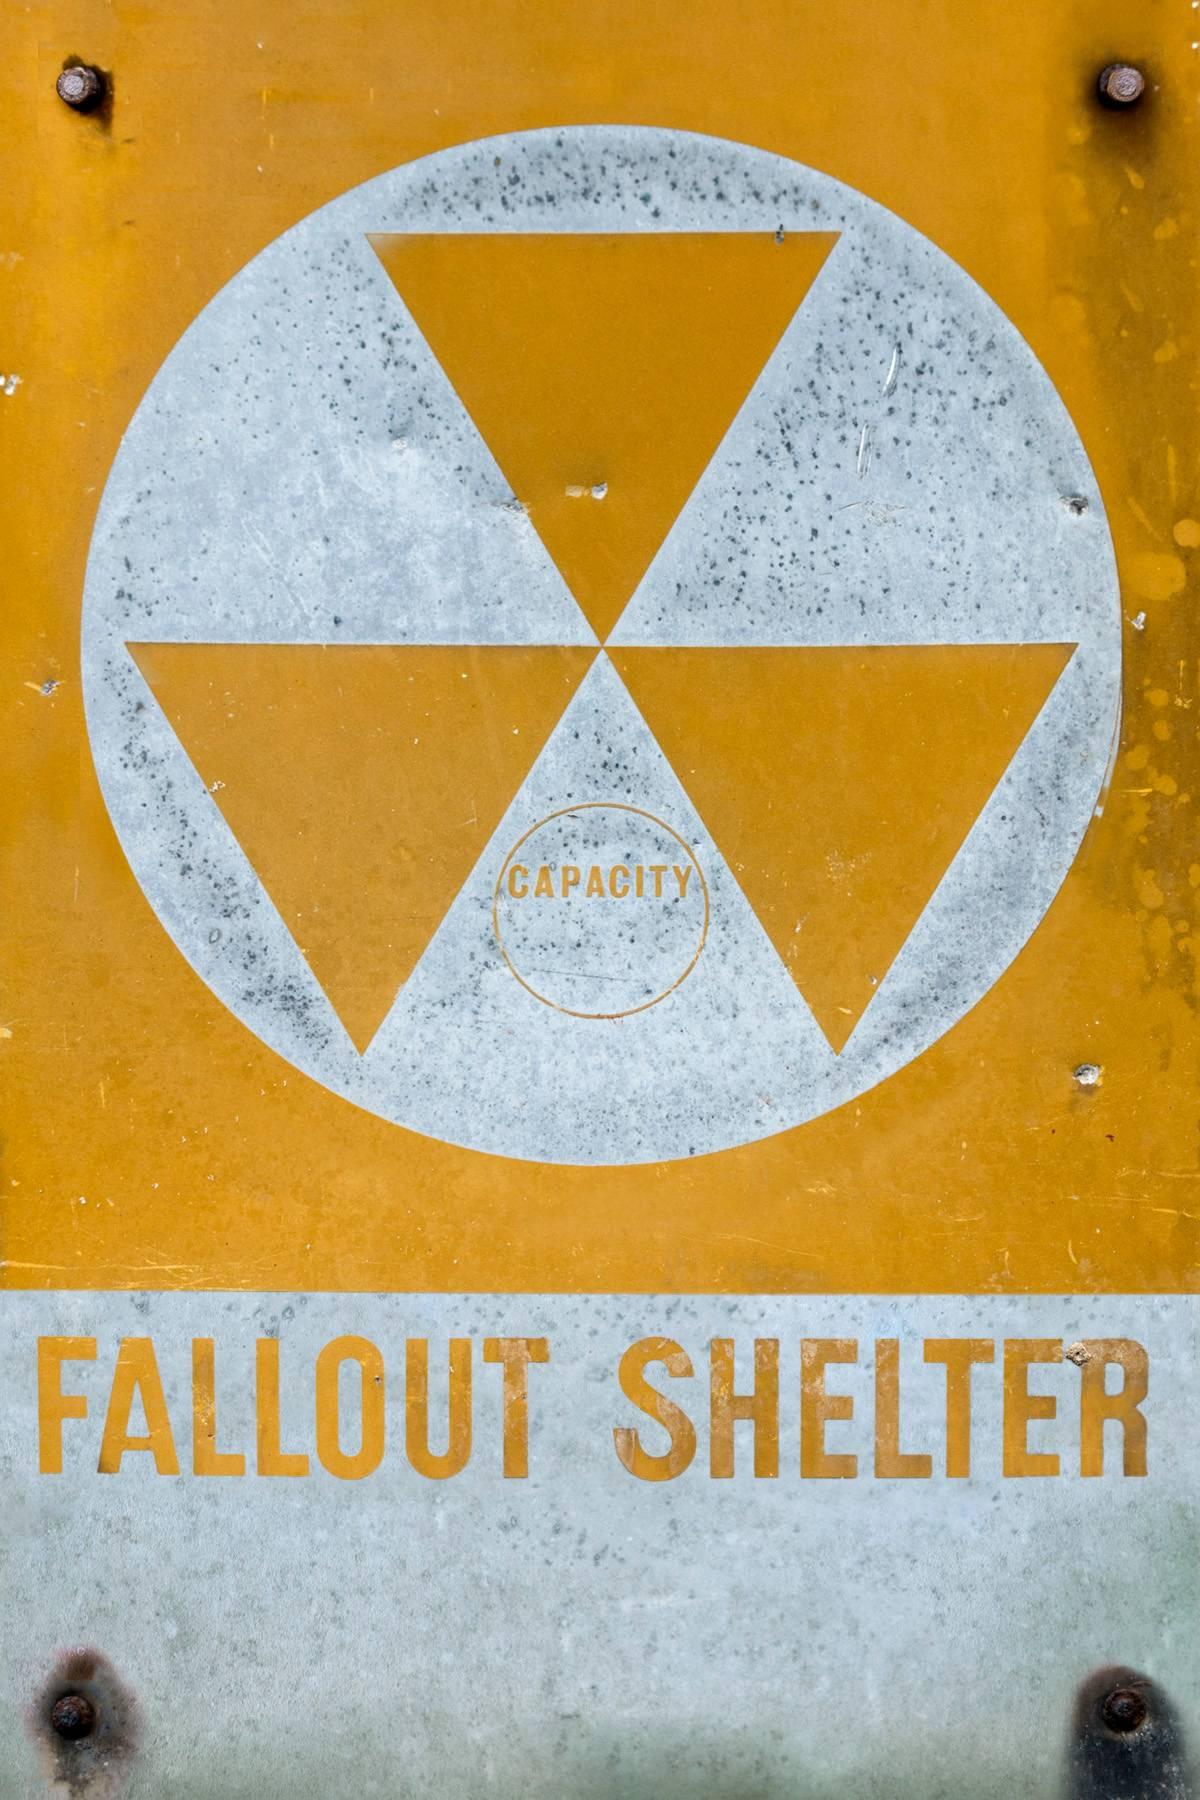 Fallout Shelter, archival dye-sub print on aluminum